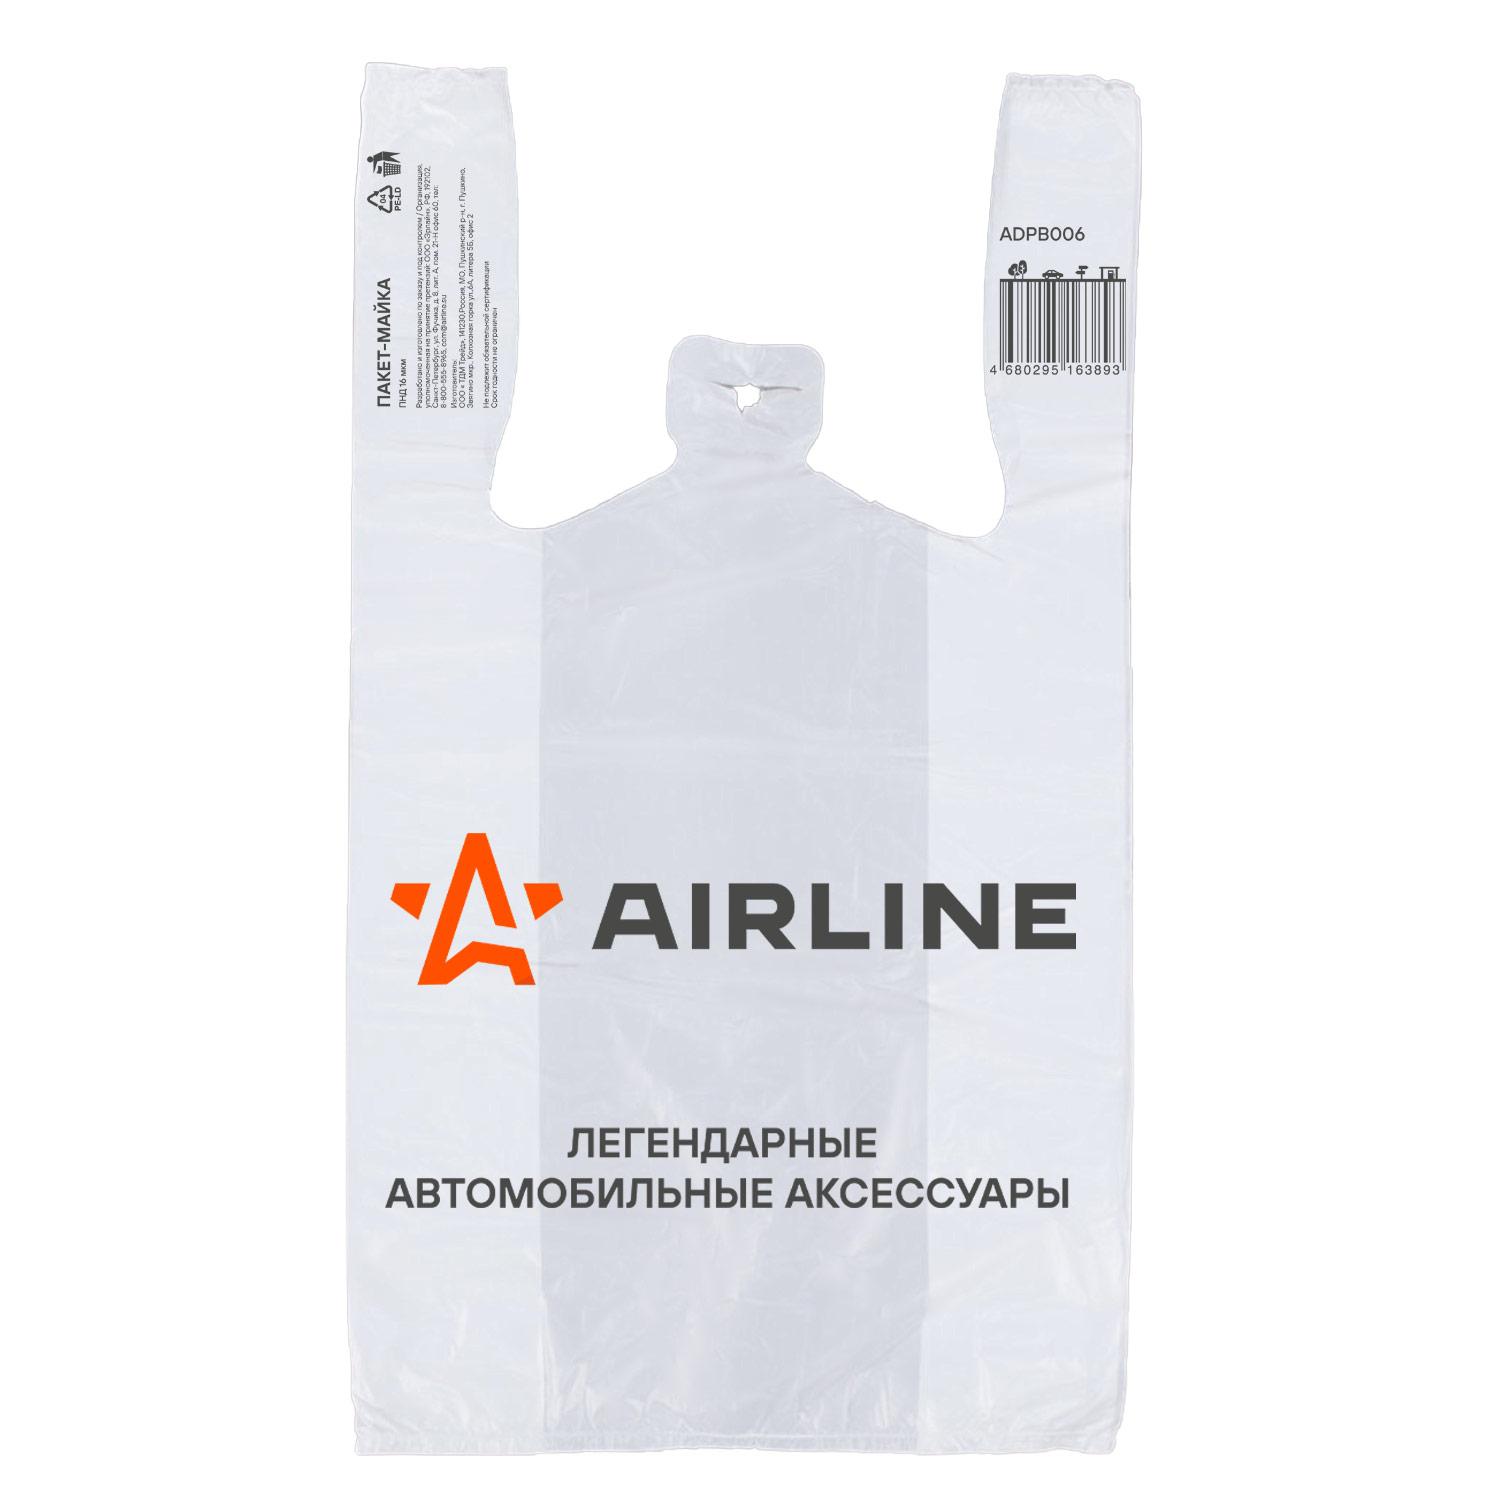 Пакет-майка фирменный airline, ПНД 16 мкм (28*50+14 см), белый - AIRLINE ADPB006